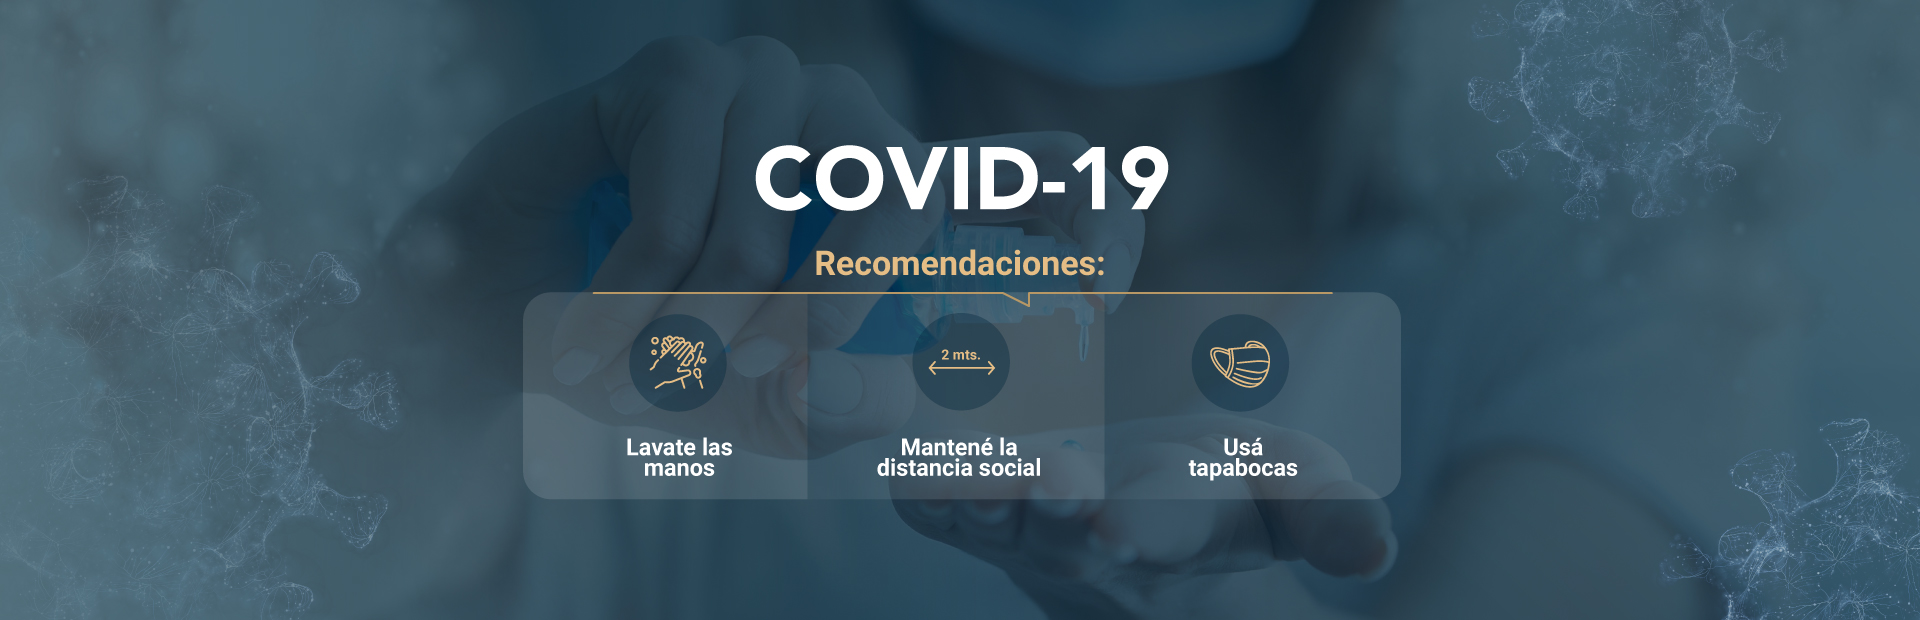 Coronavirus - Recomendaciones